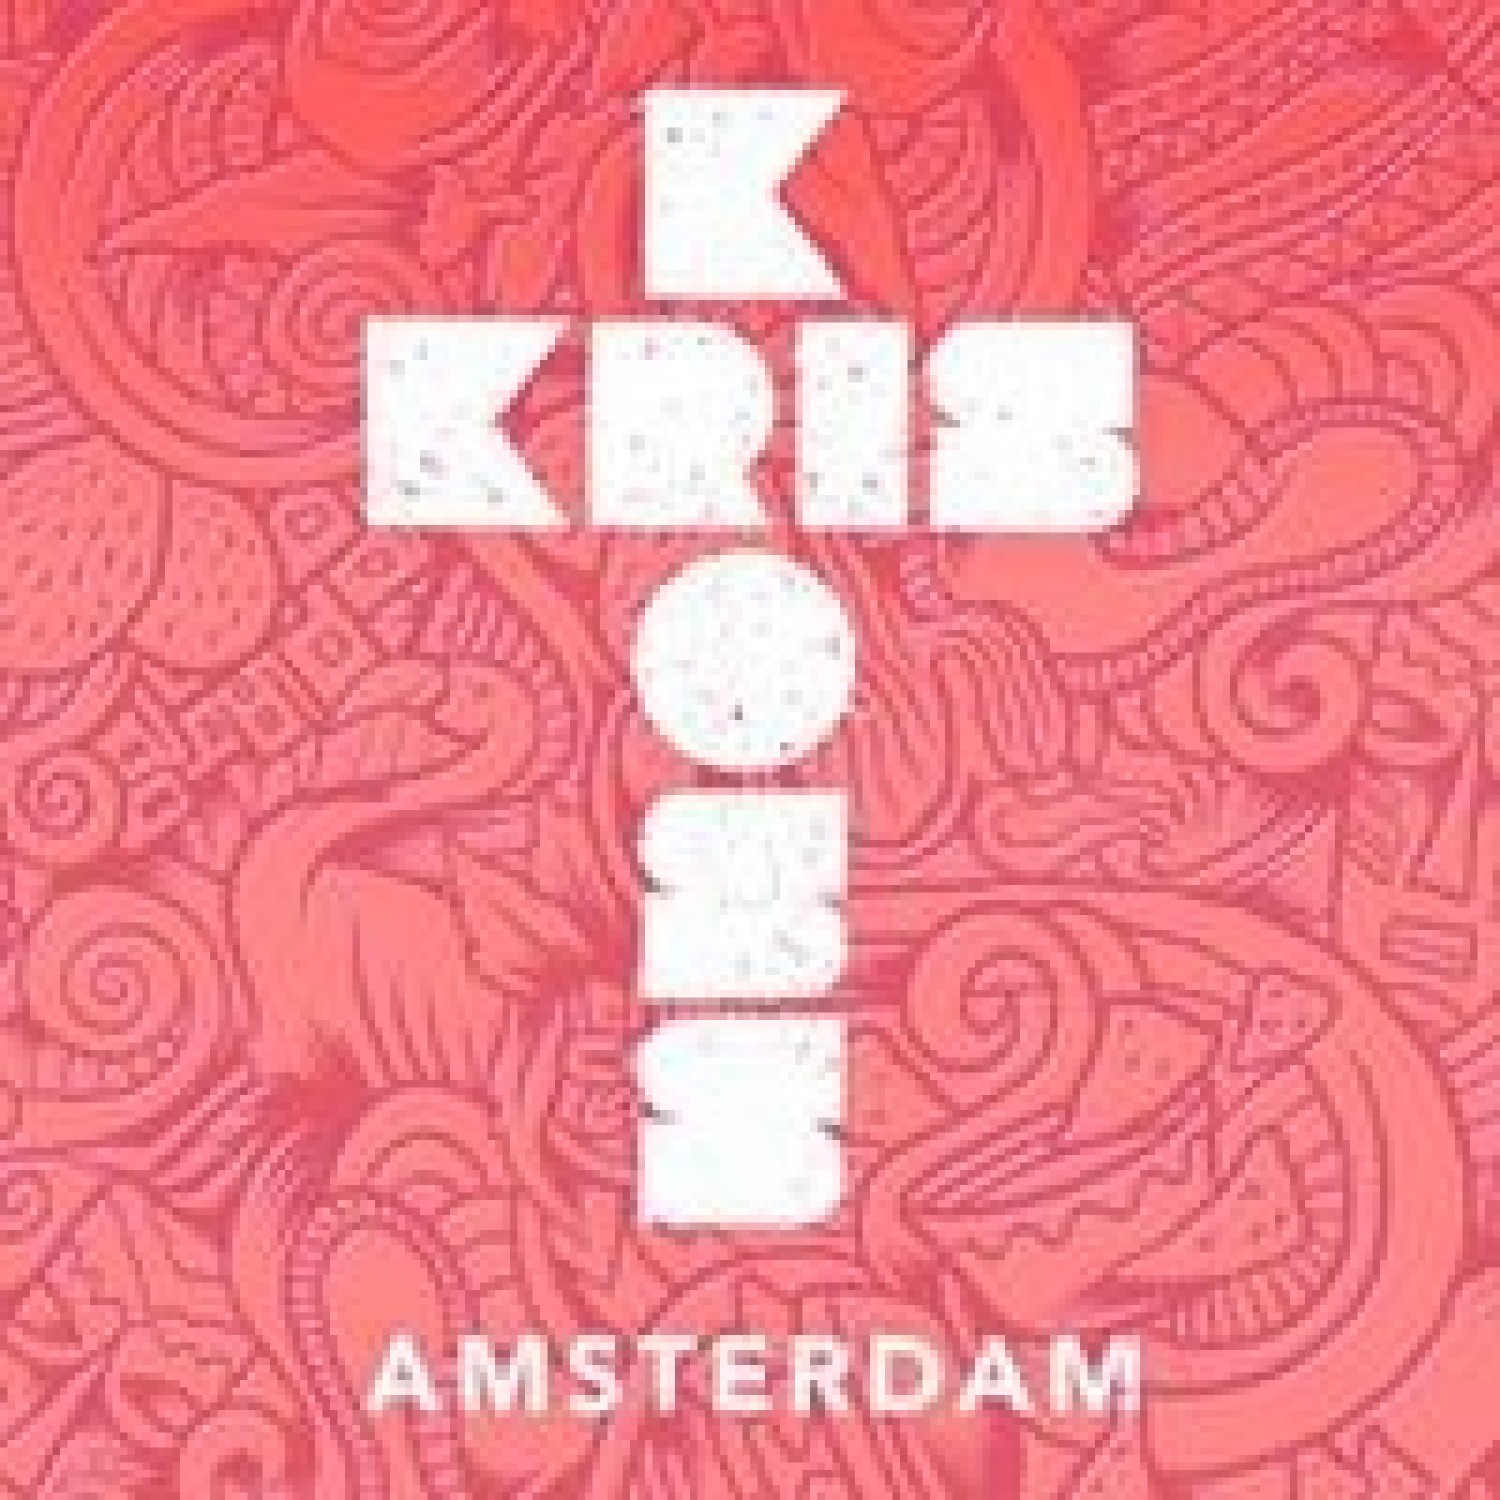 Kris Kross Amsterdam